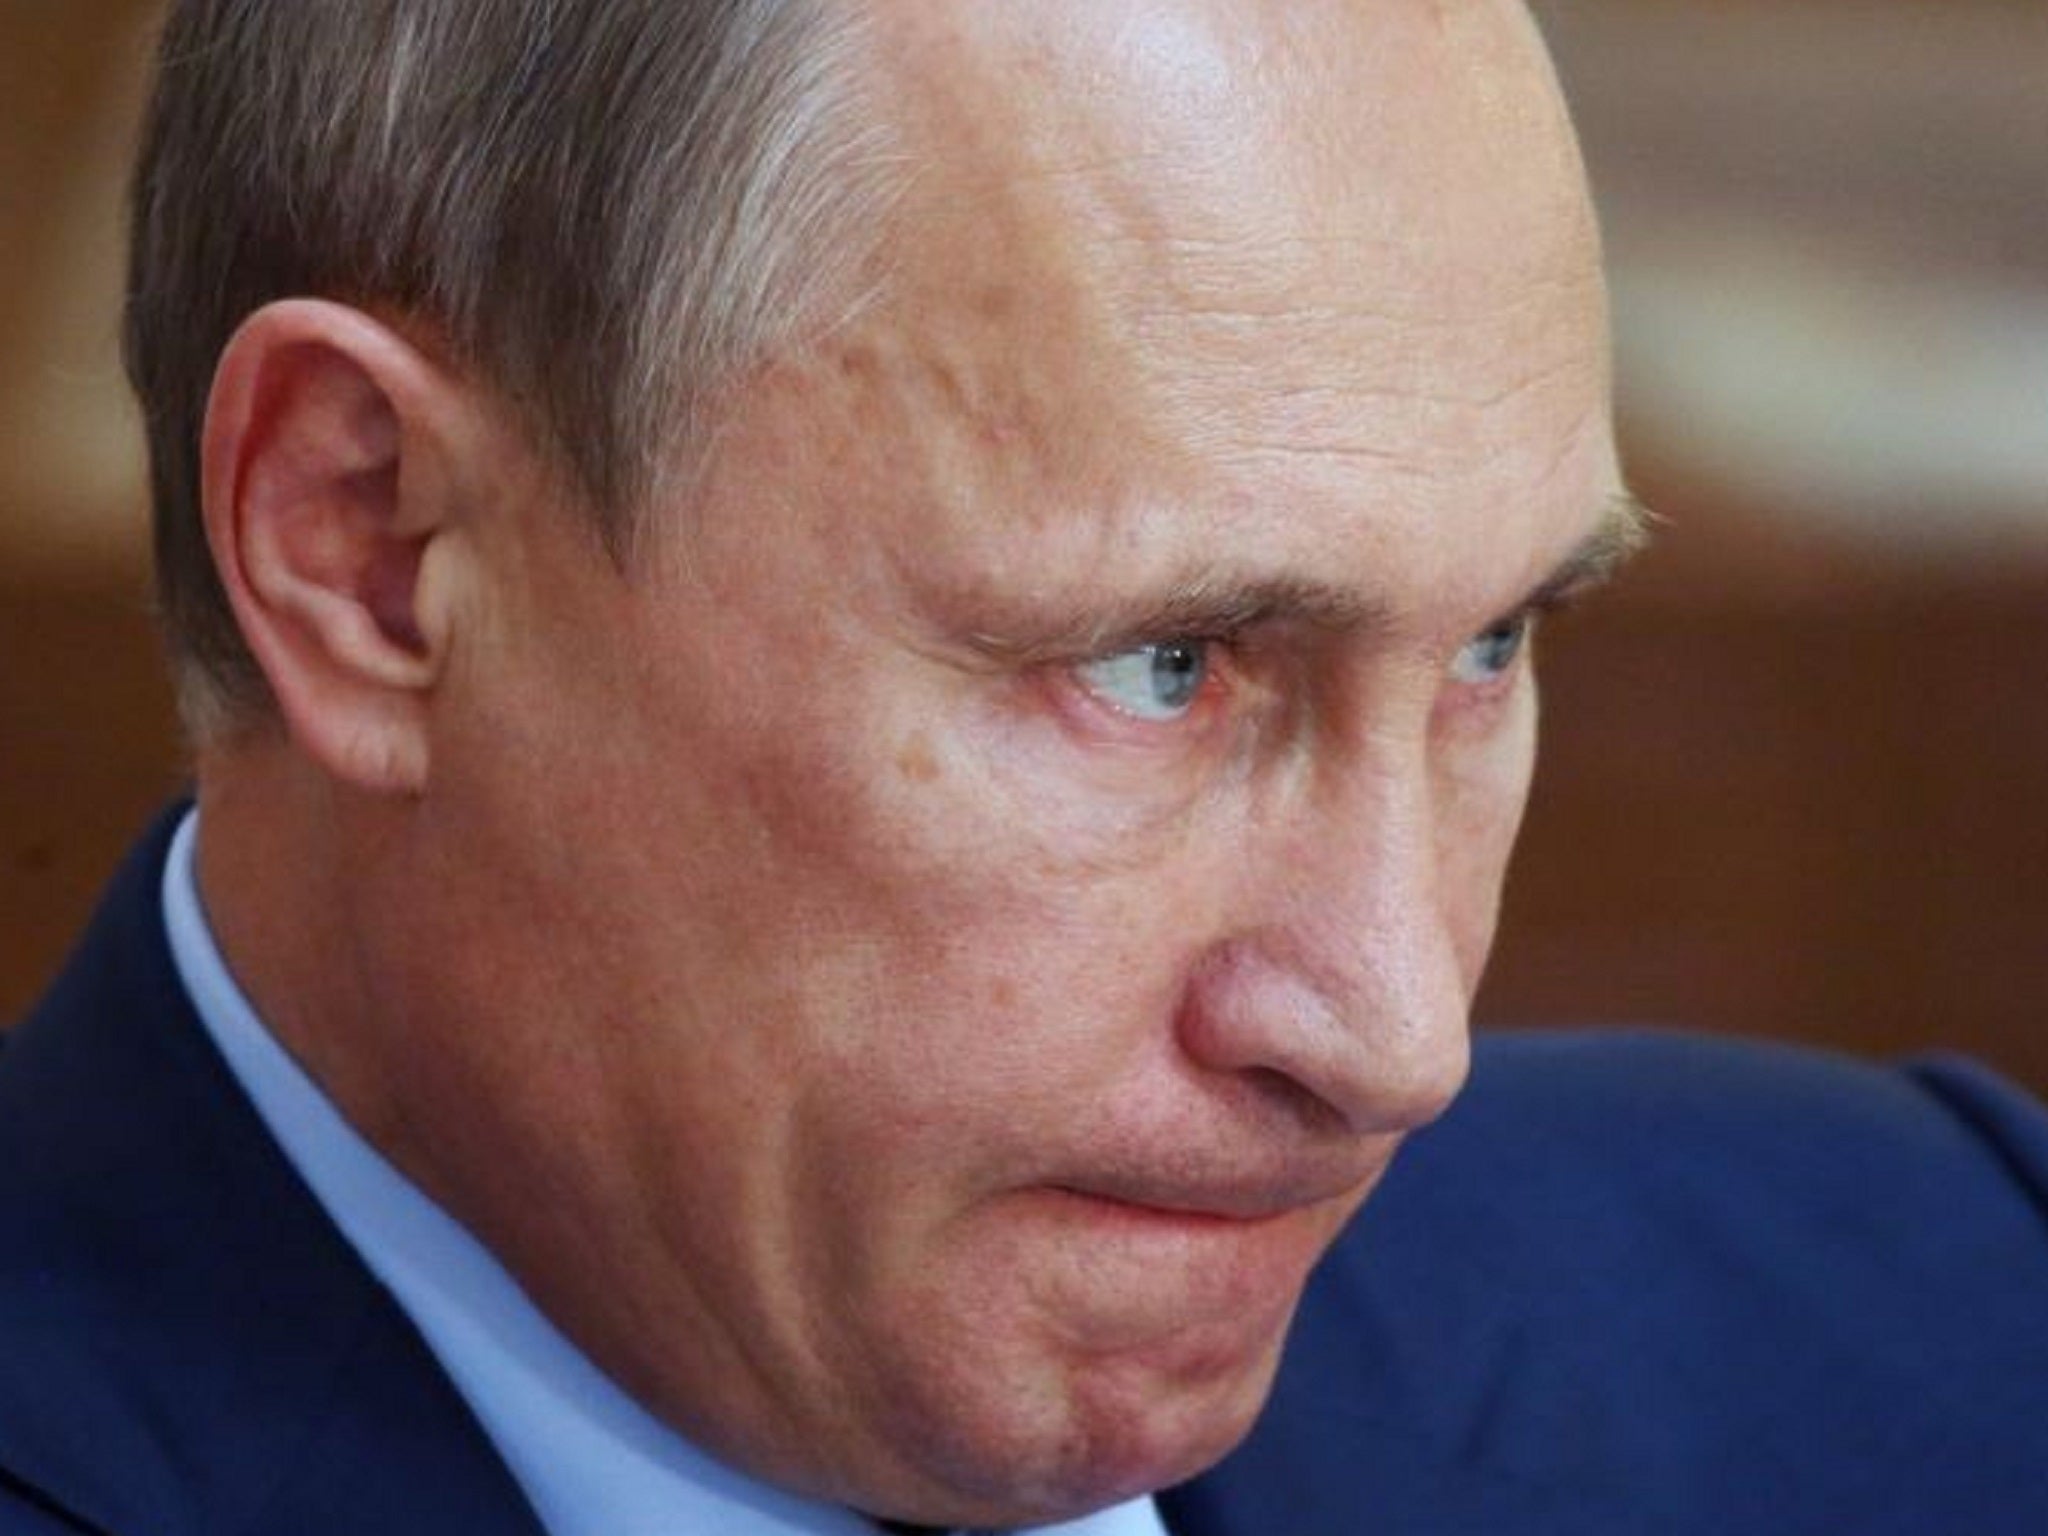 Putin may face internal problems